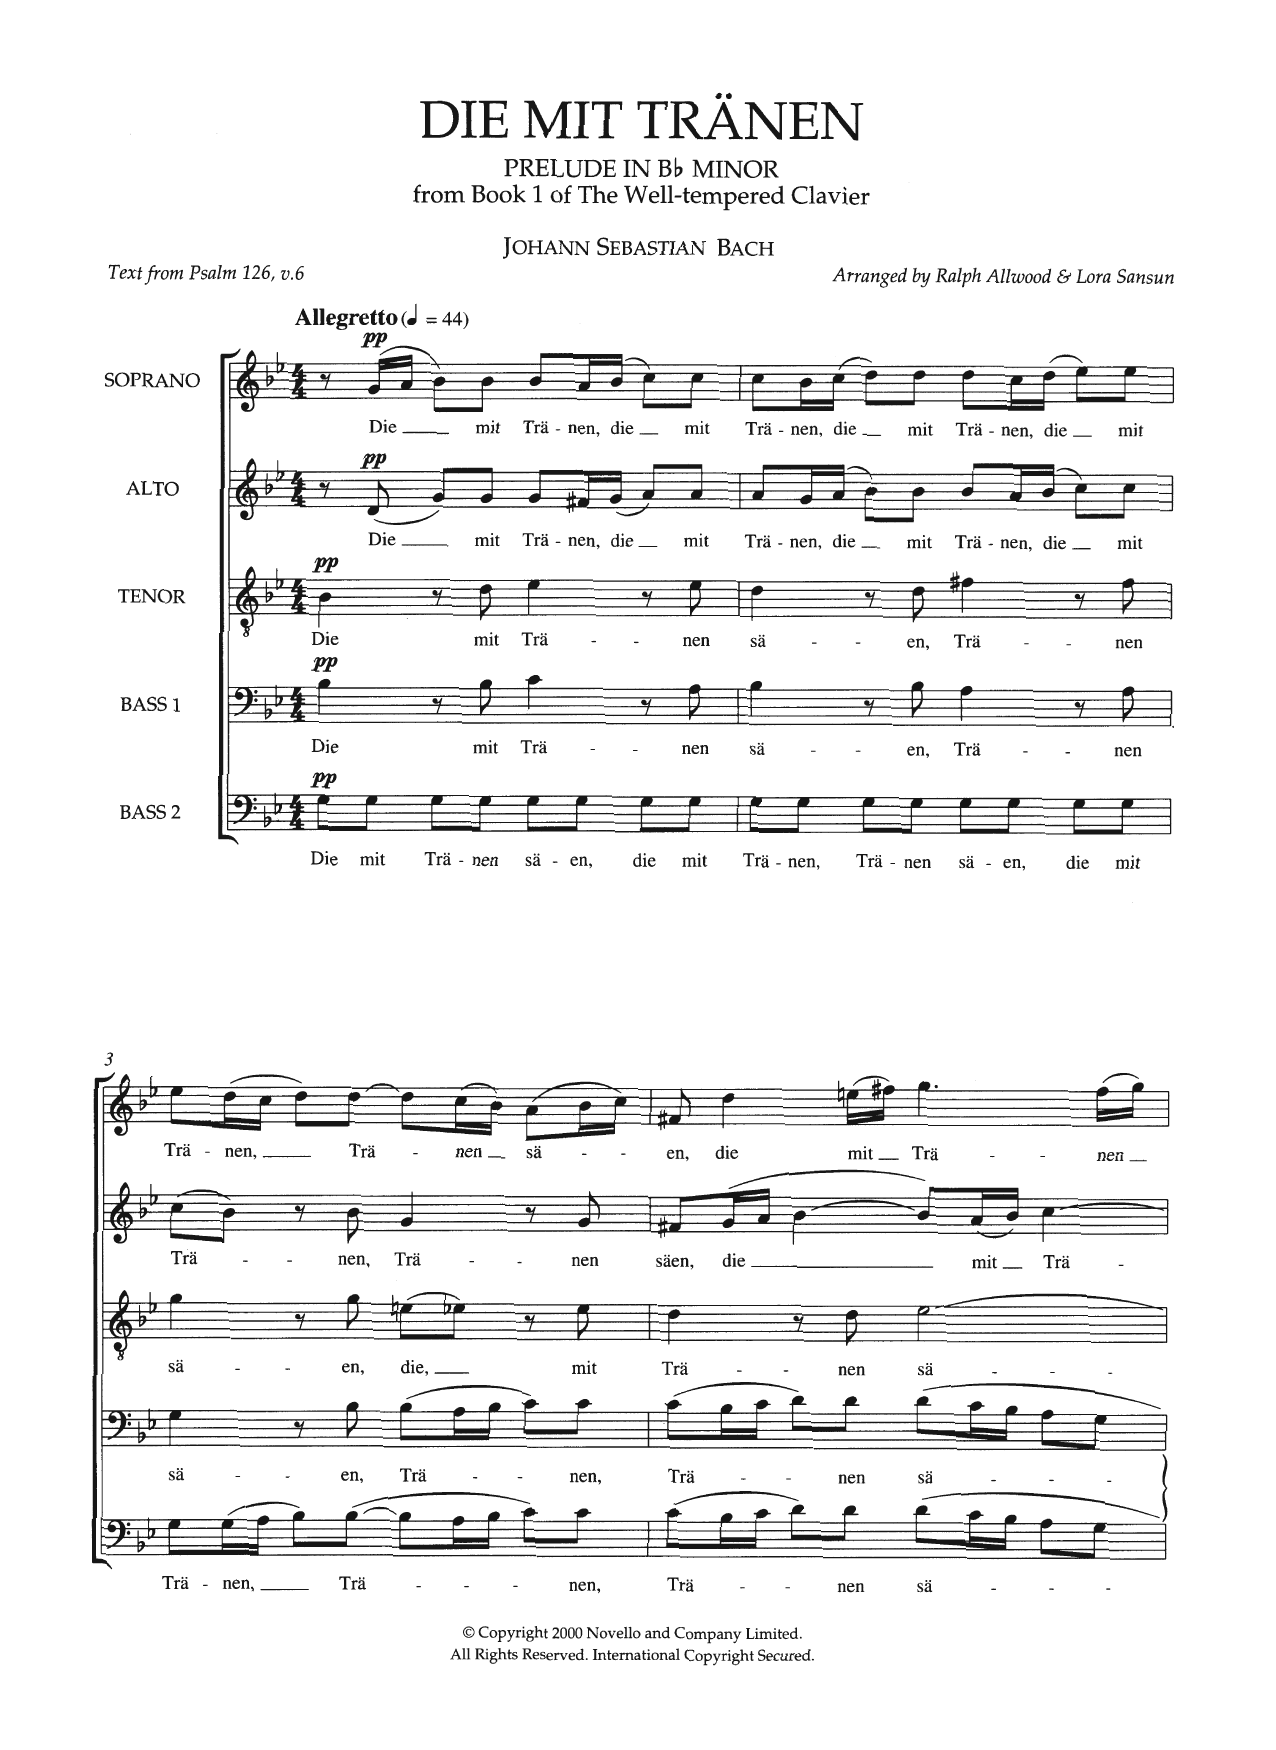 Johann Sebastian Bach Die Mit Tranen (arr. Ralph Allwood and Lora Sansun) Sheet Music Notes & Chords for SATB Choir - Download or Print PDF